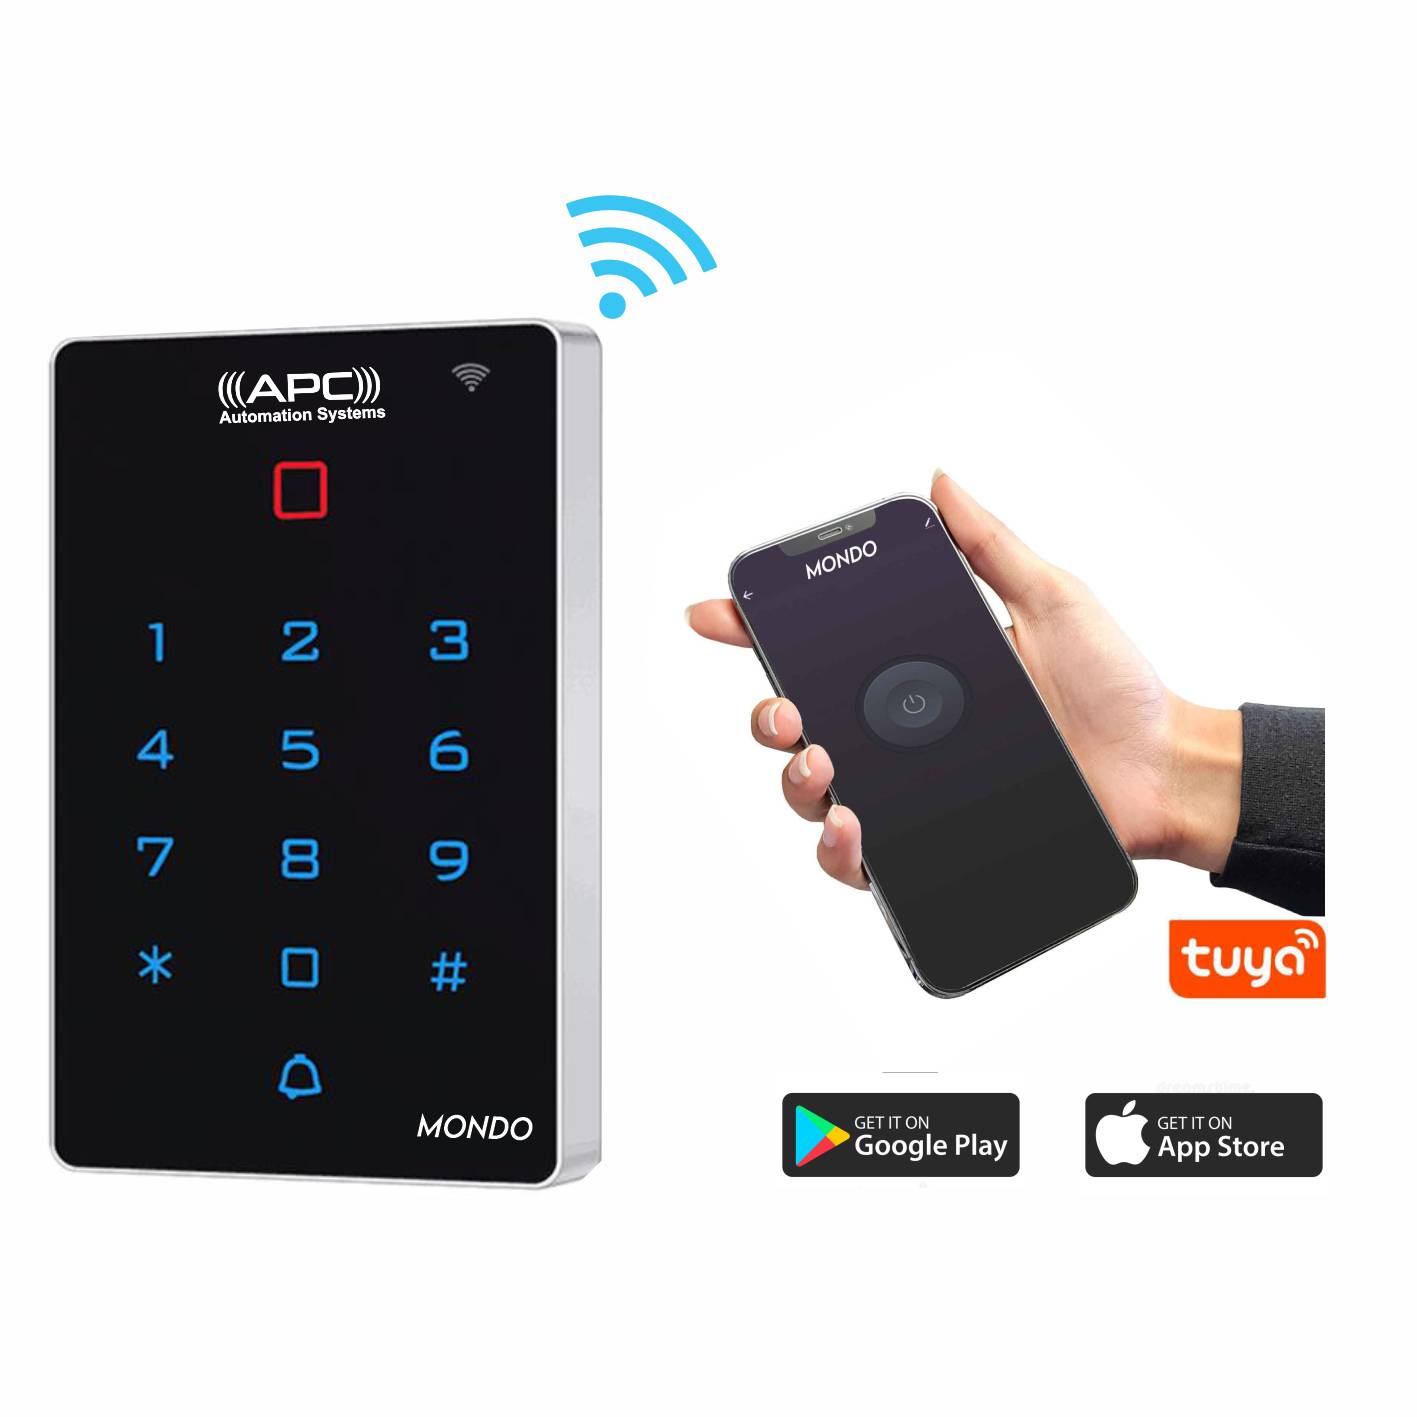 APC Mondo Wi-Fi Keypad with APP Control and Swipe Tag Reader Access Control